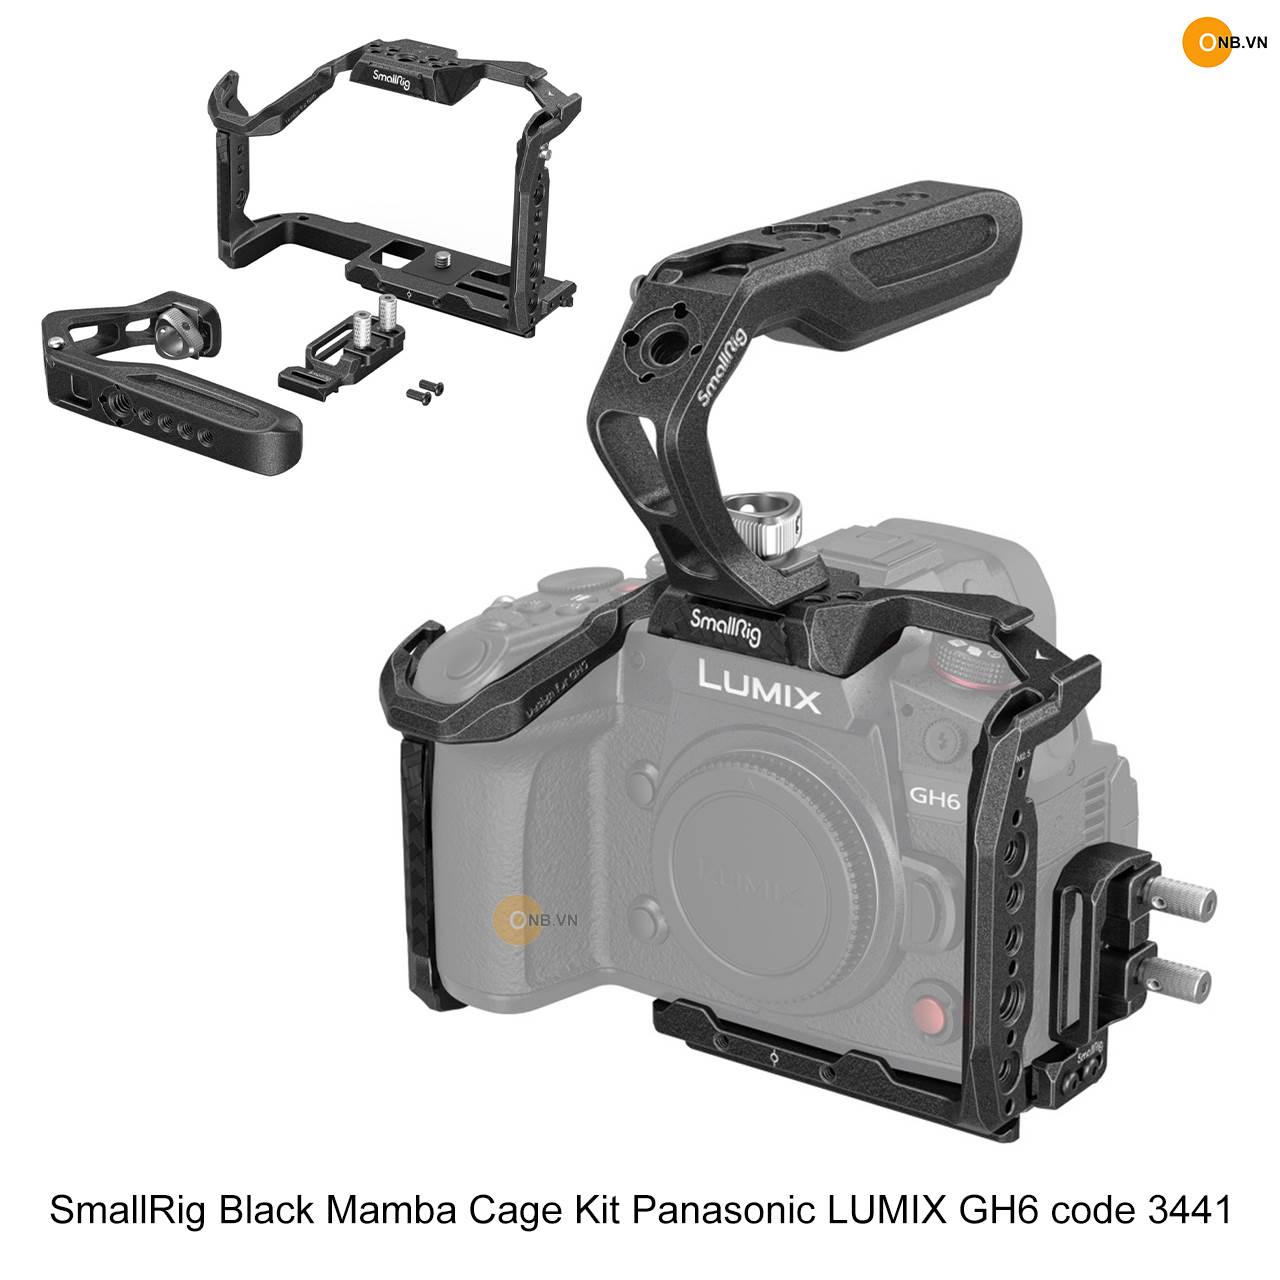 SmallRig Black Mamba Cage Kit Panasonic LUMIX GH6 code 3441